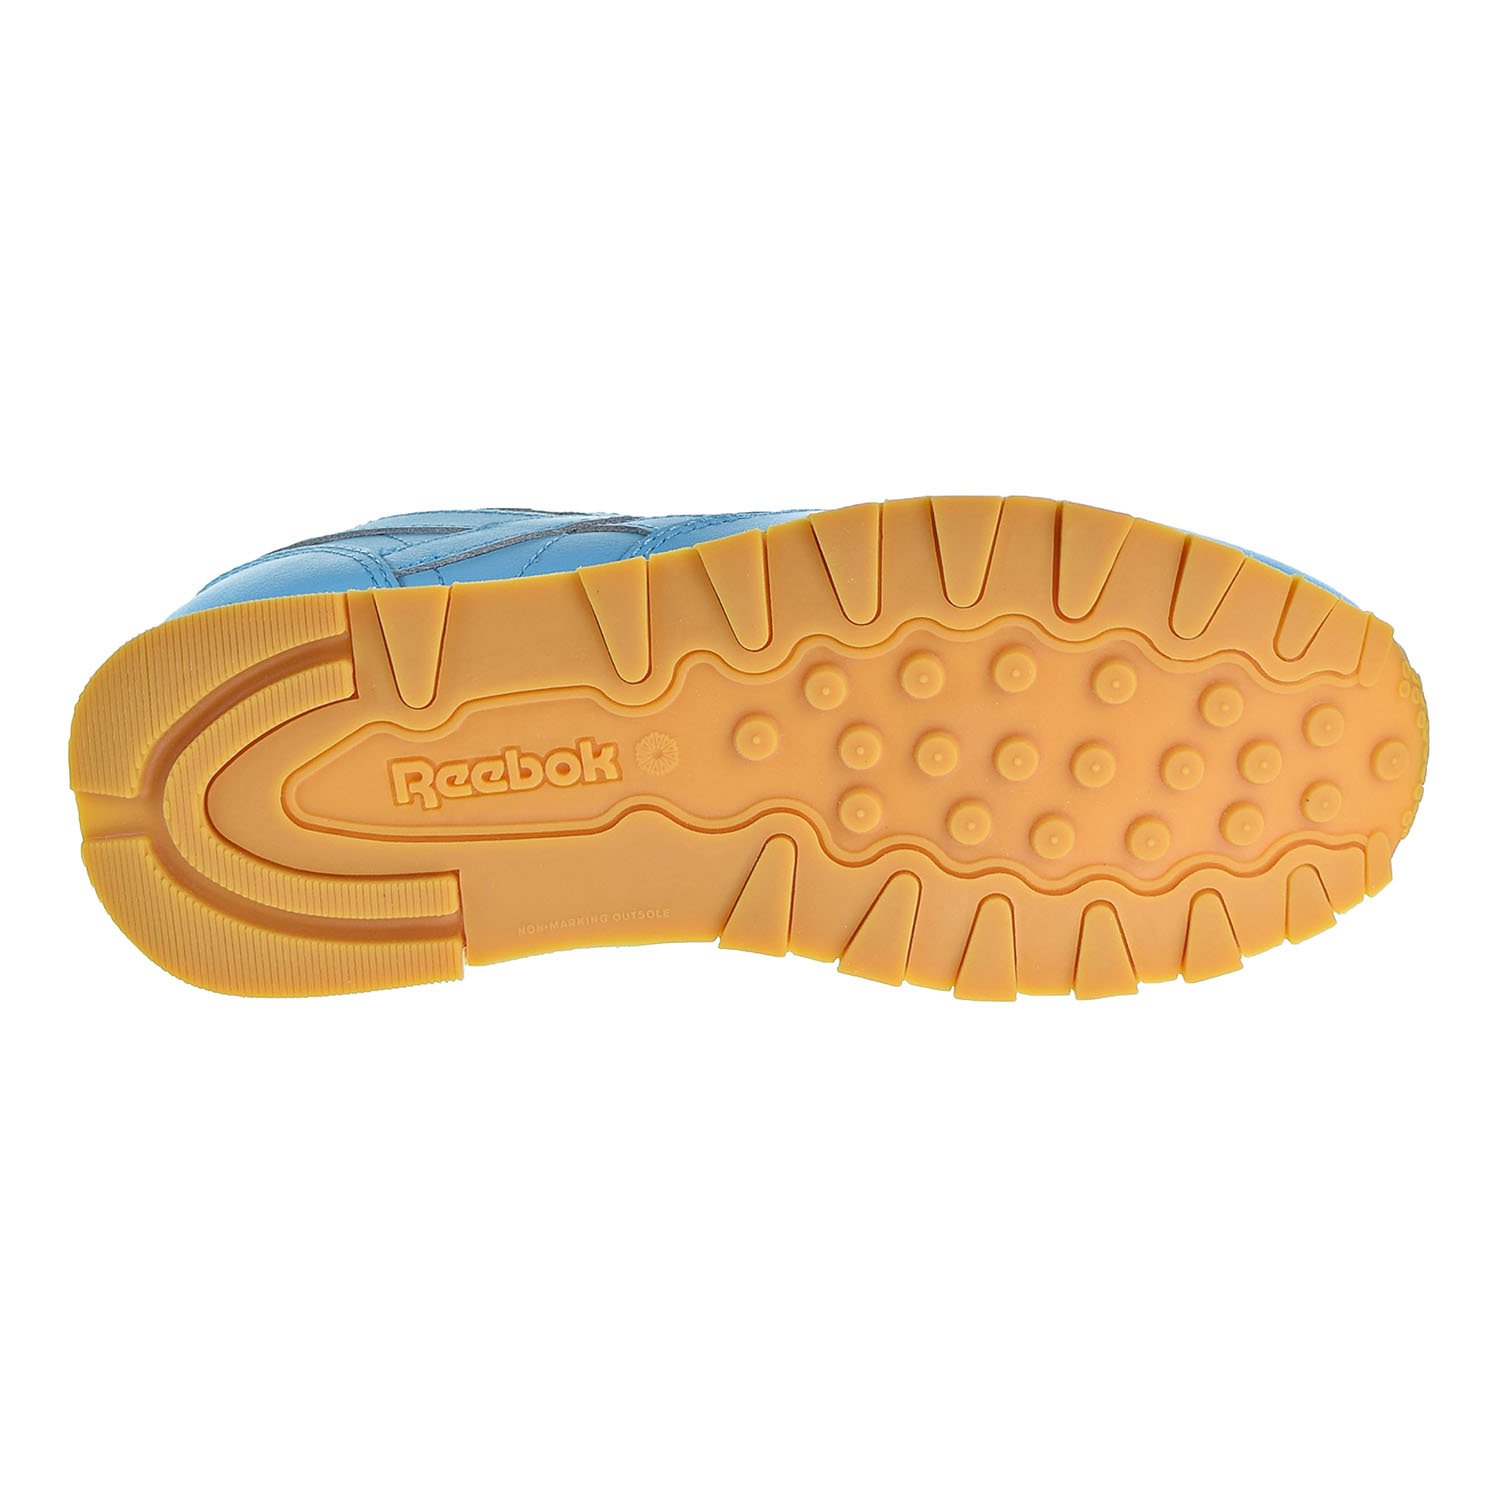 Reebok Classic Leather Gum Boys Shoes Crisp Blue/White/Gum cn4095 - image 6 of 6